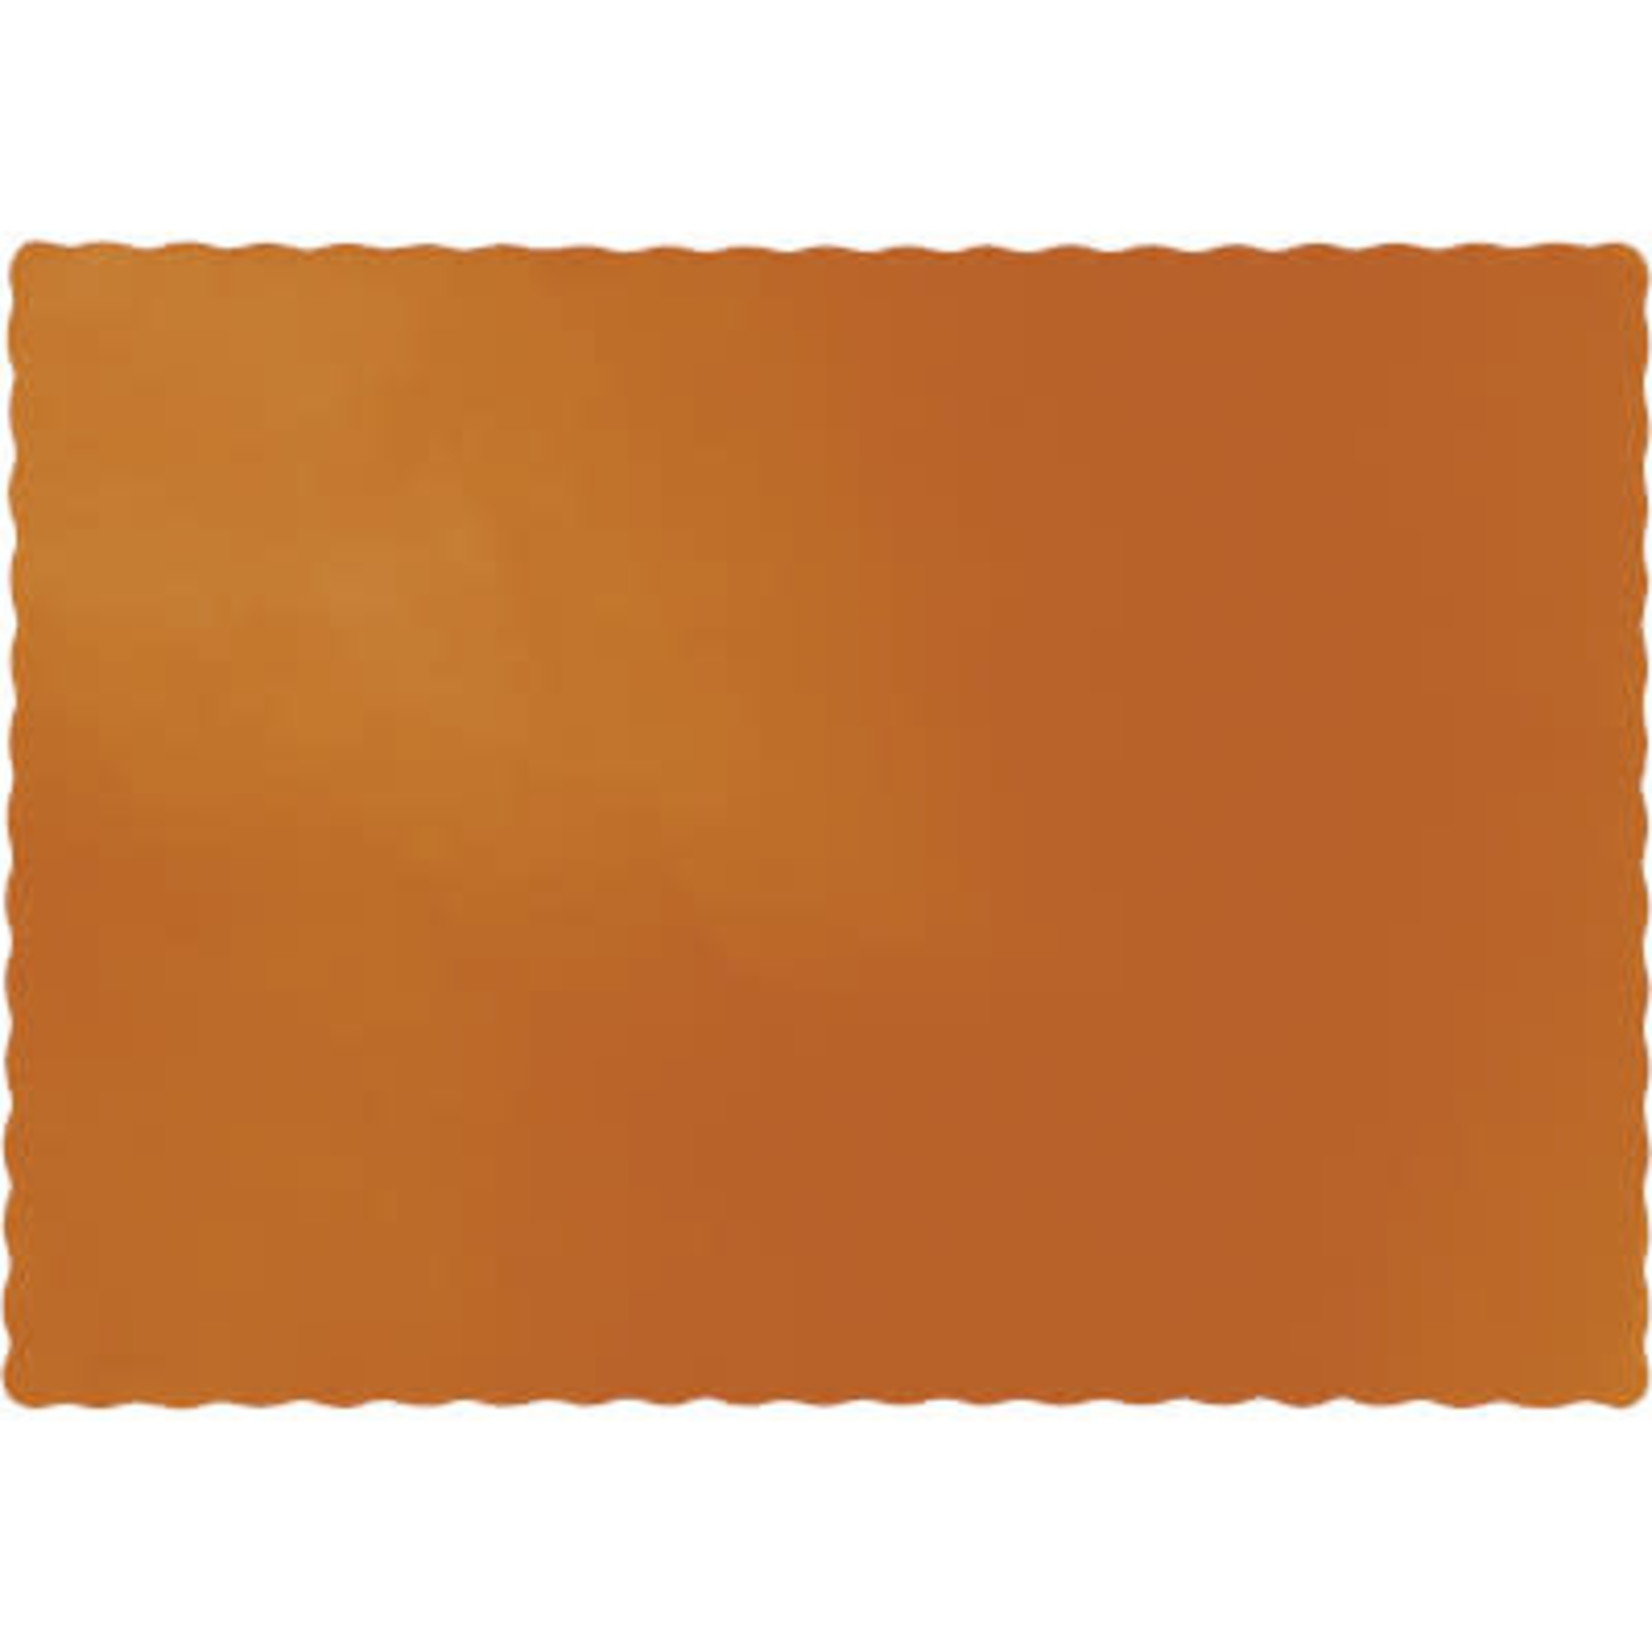 Touch of Color Pumpkin Spice Orange Paper Placemats - 50ct.